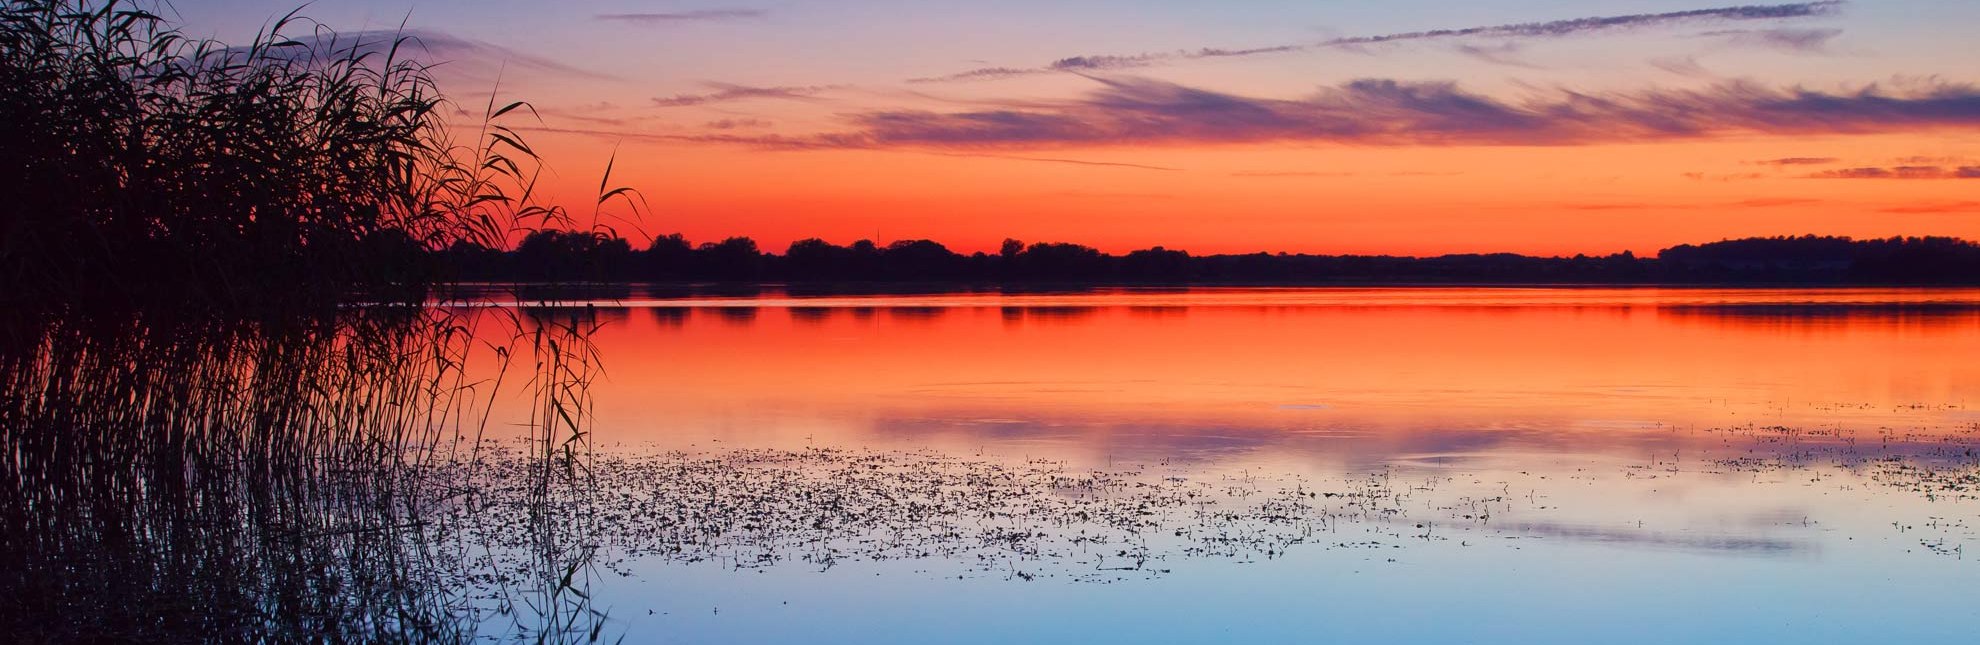 Romantischer Sonnenuntergang am Mechower See., © Thomas Ebelt / HLMS GmbH